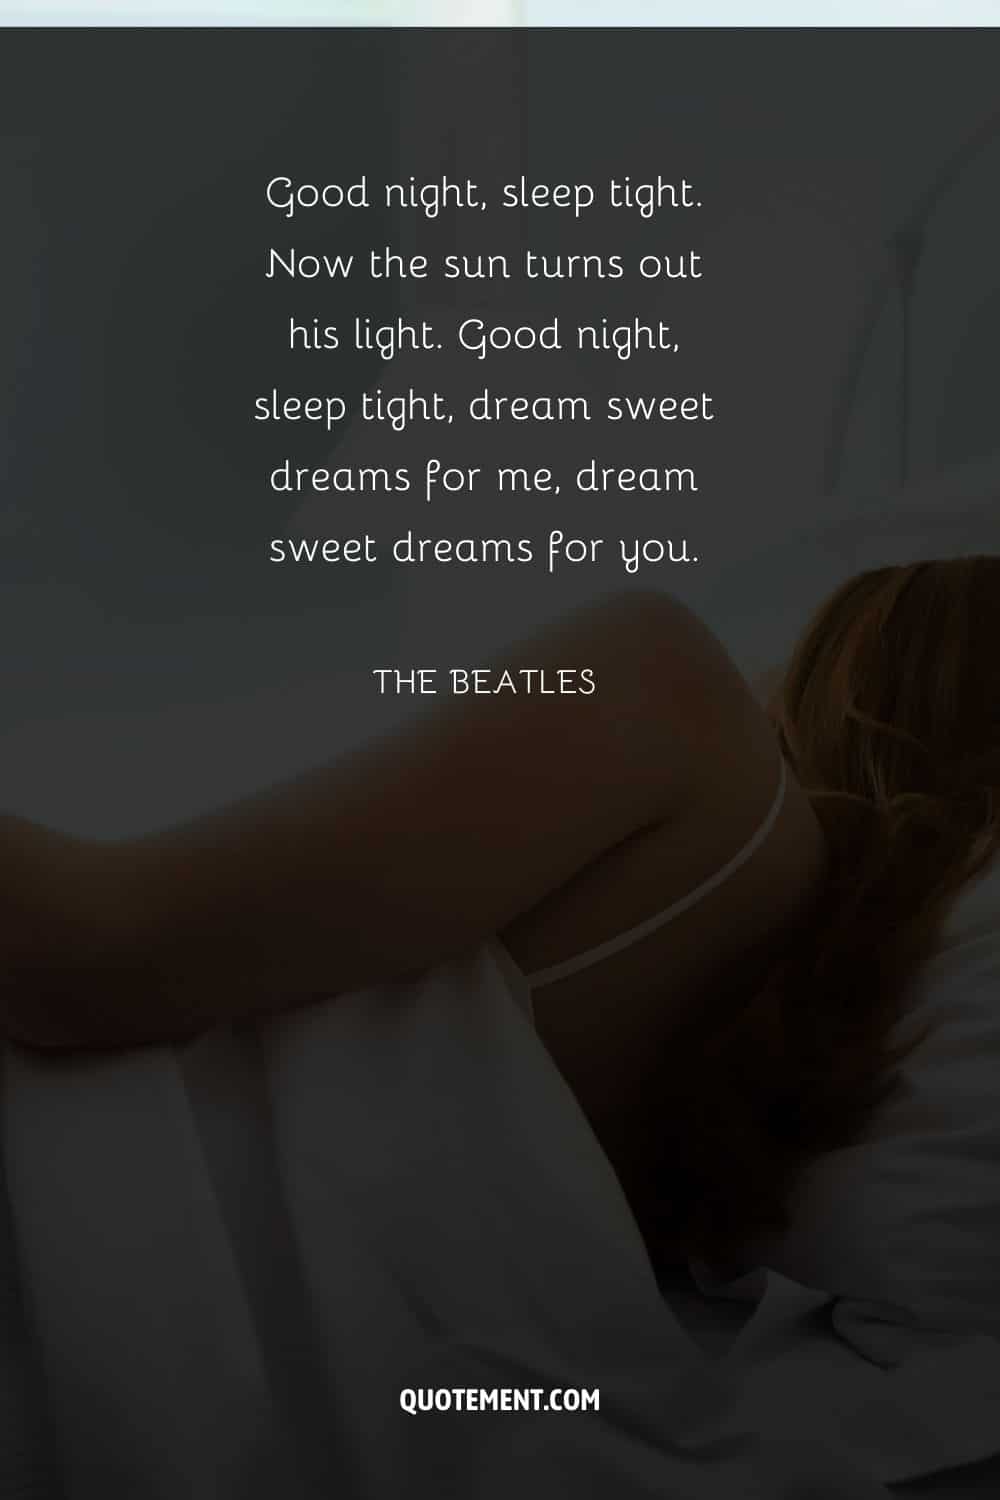 sleeping woman image representing good night sweet dreams quote